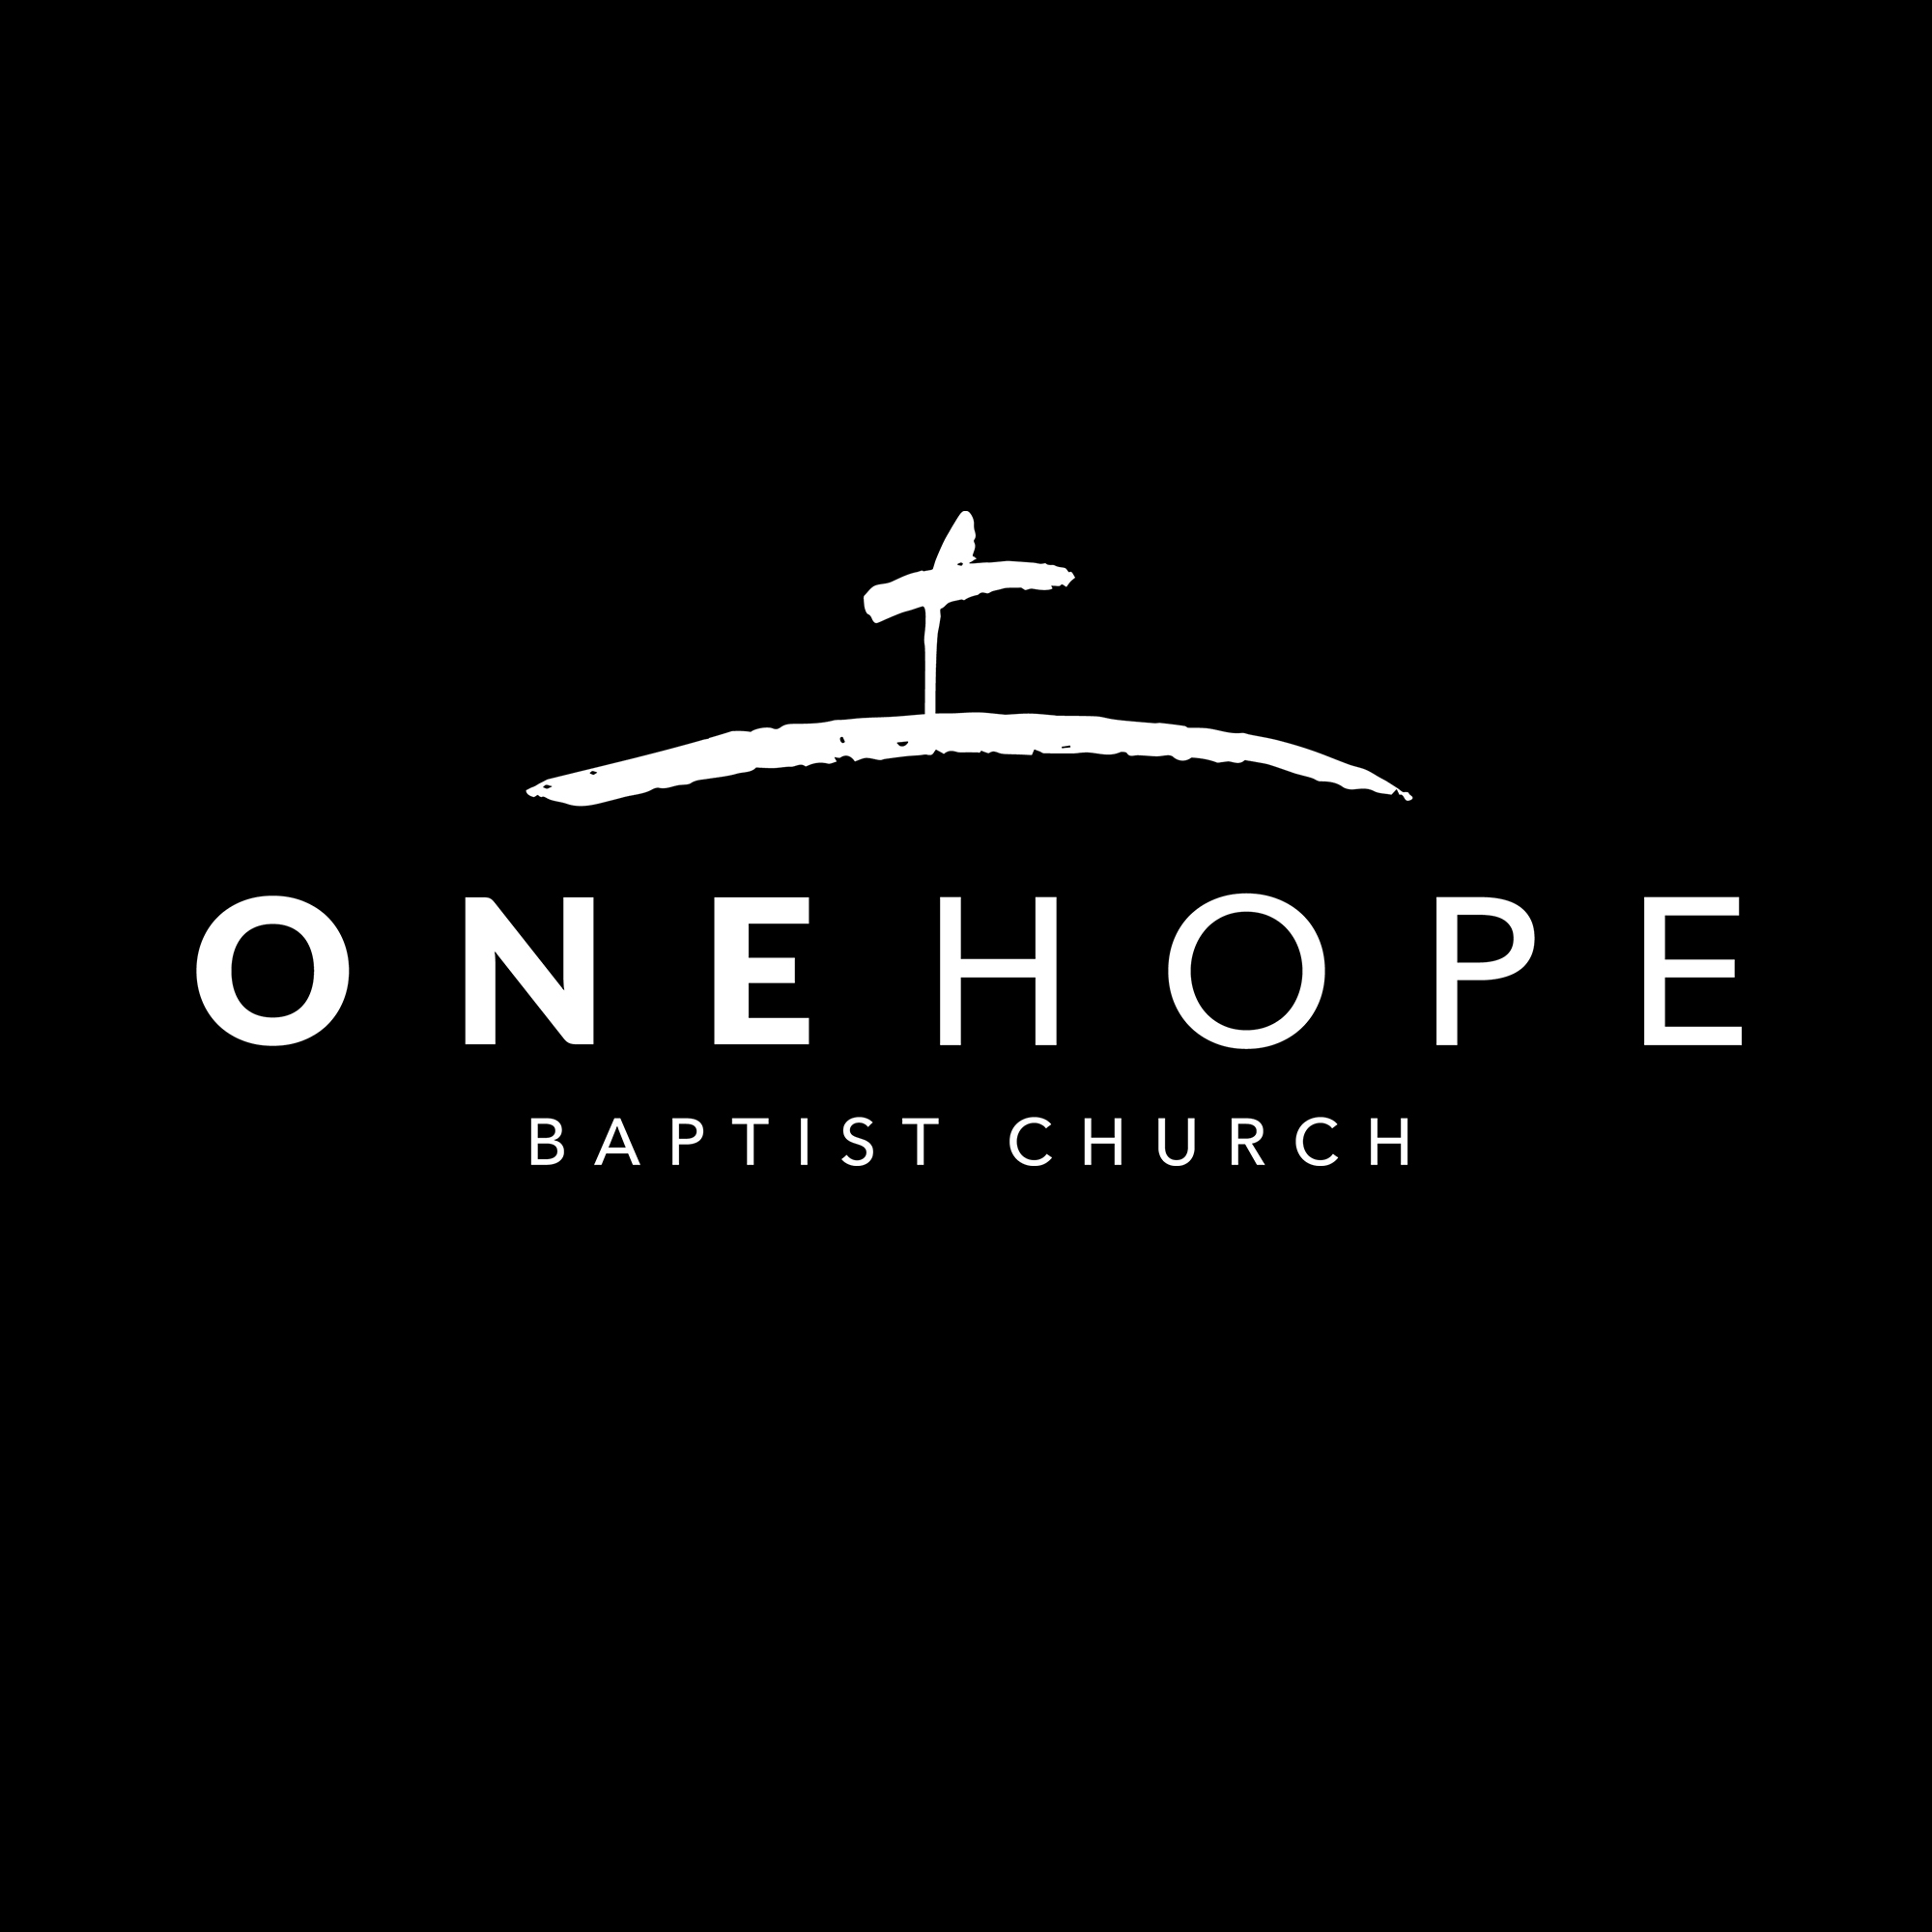 OneHope Baptist Church